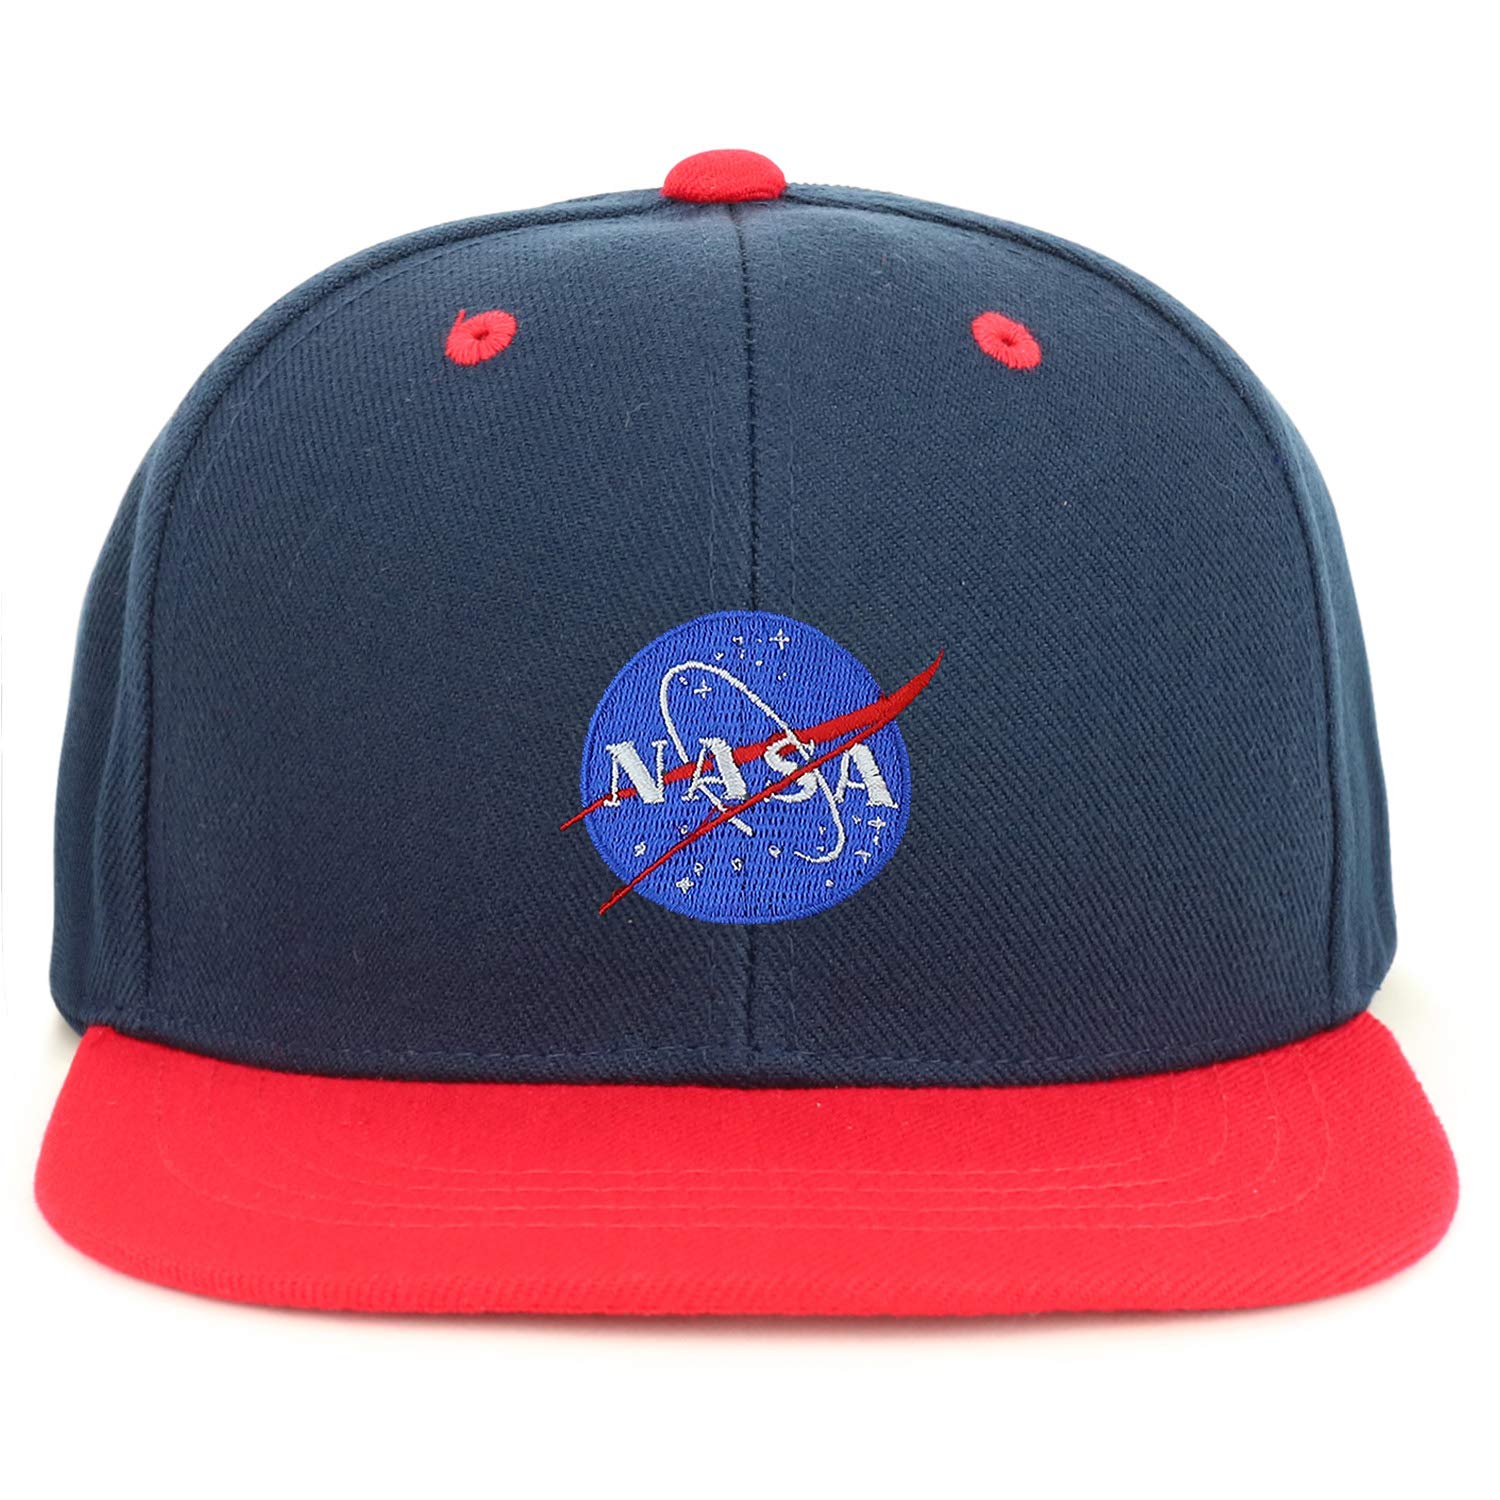 Armycrew Youth Kid's Small NASA Insignia Patch Flat Bill Snapback 2-Tone Baseball Cap